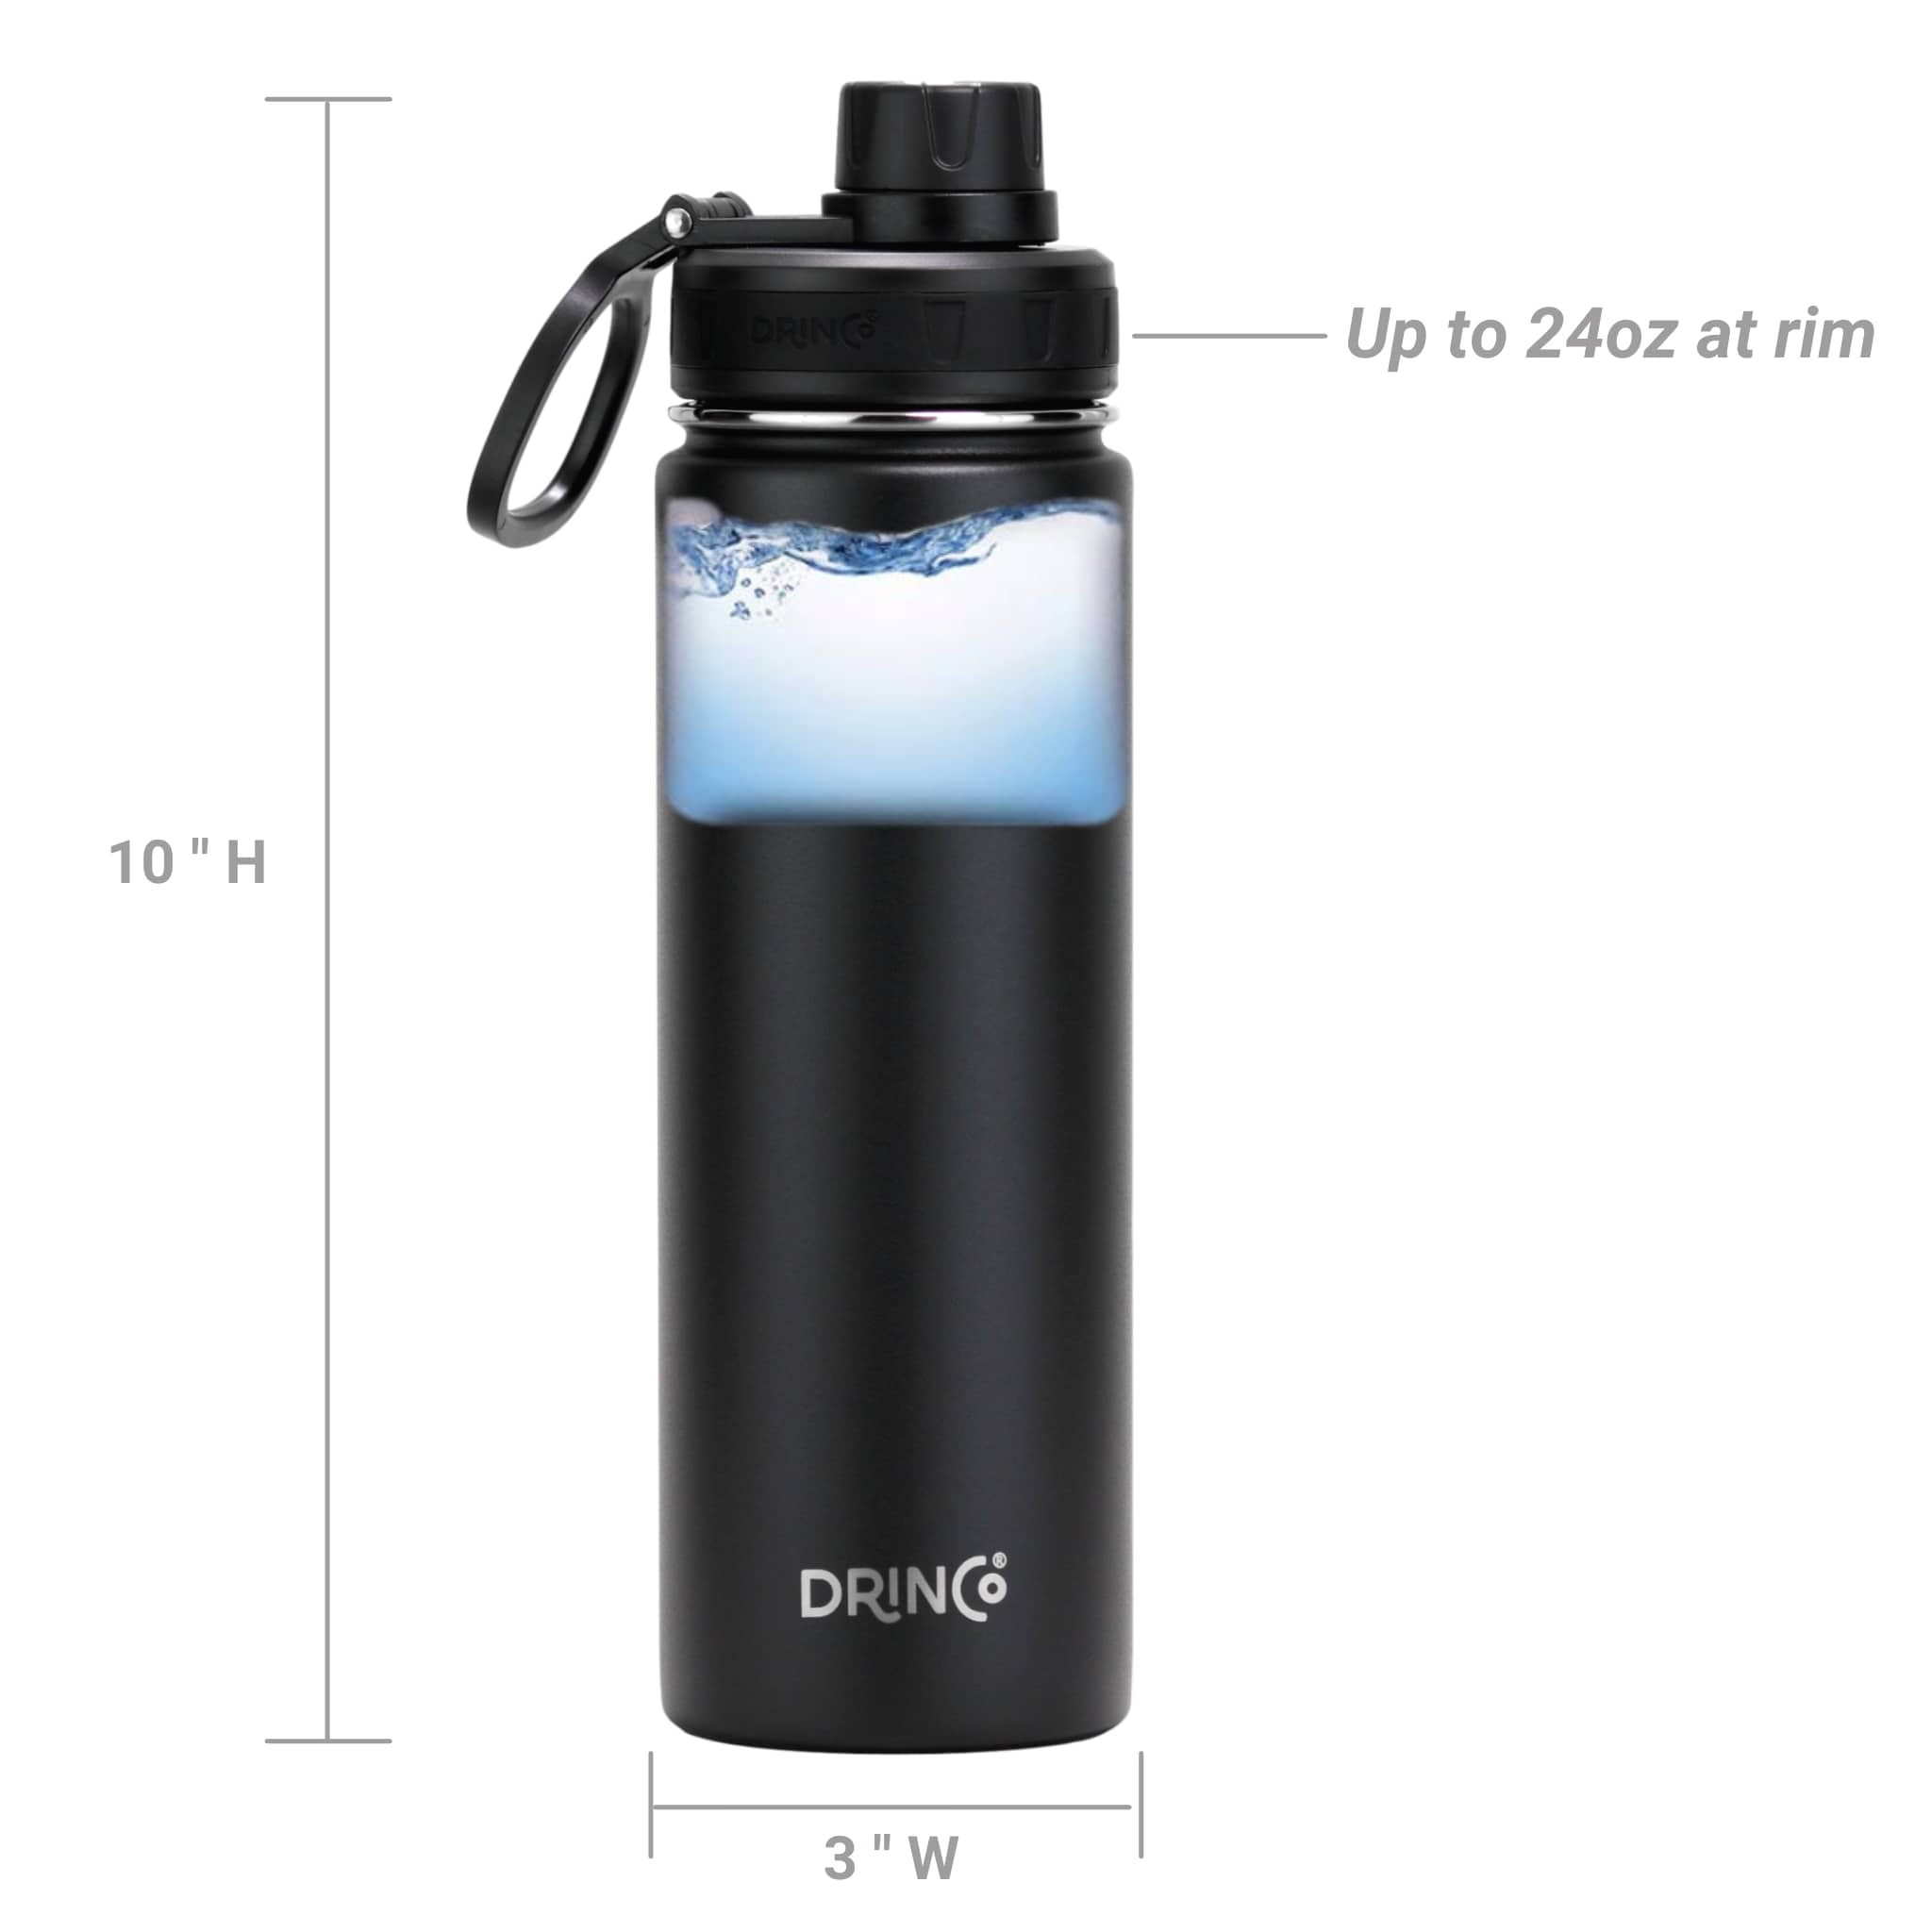 DRINCO® 22oz Stainless Steel Sport Water Bottle - Black - Blade Fitness